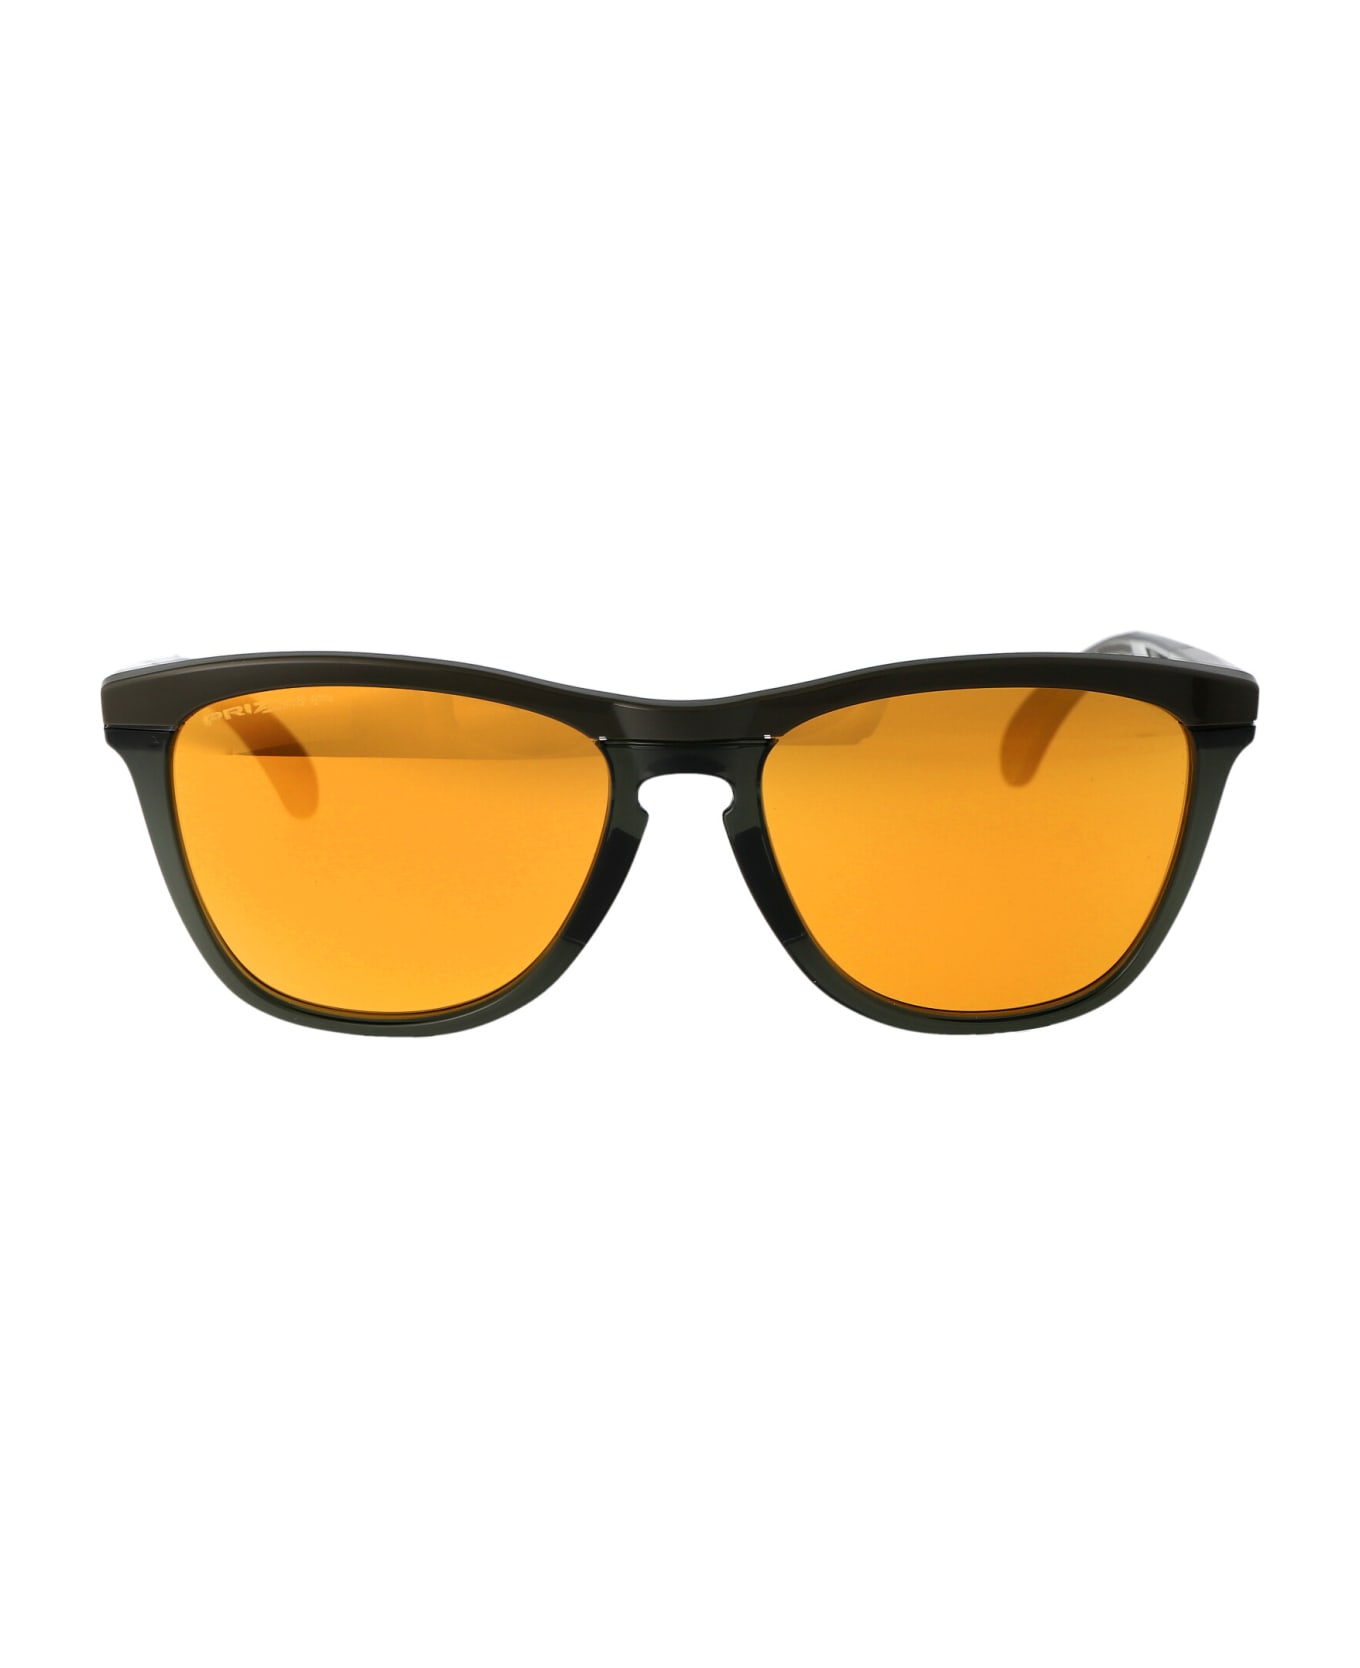 Oakley Frogskins Range Sunglasses - Black サングラス